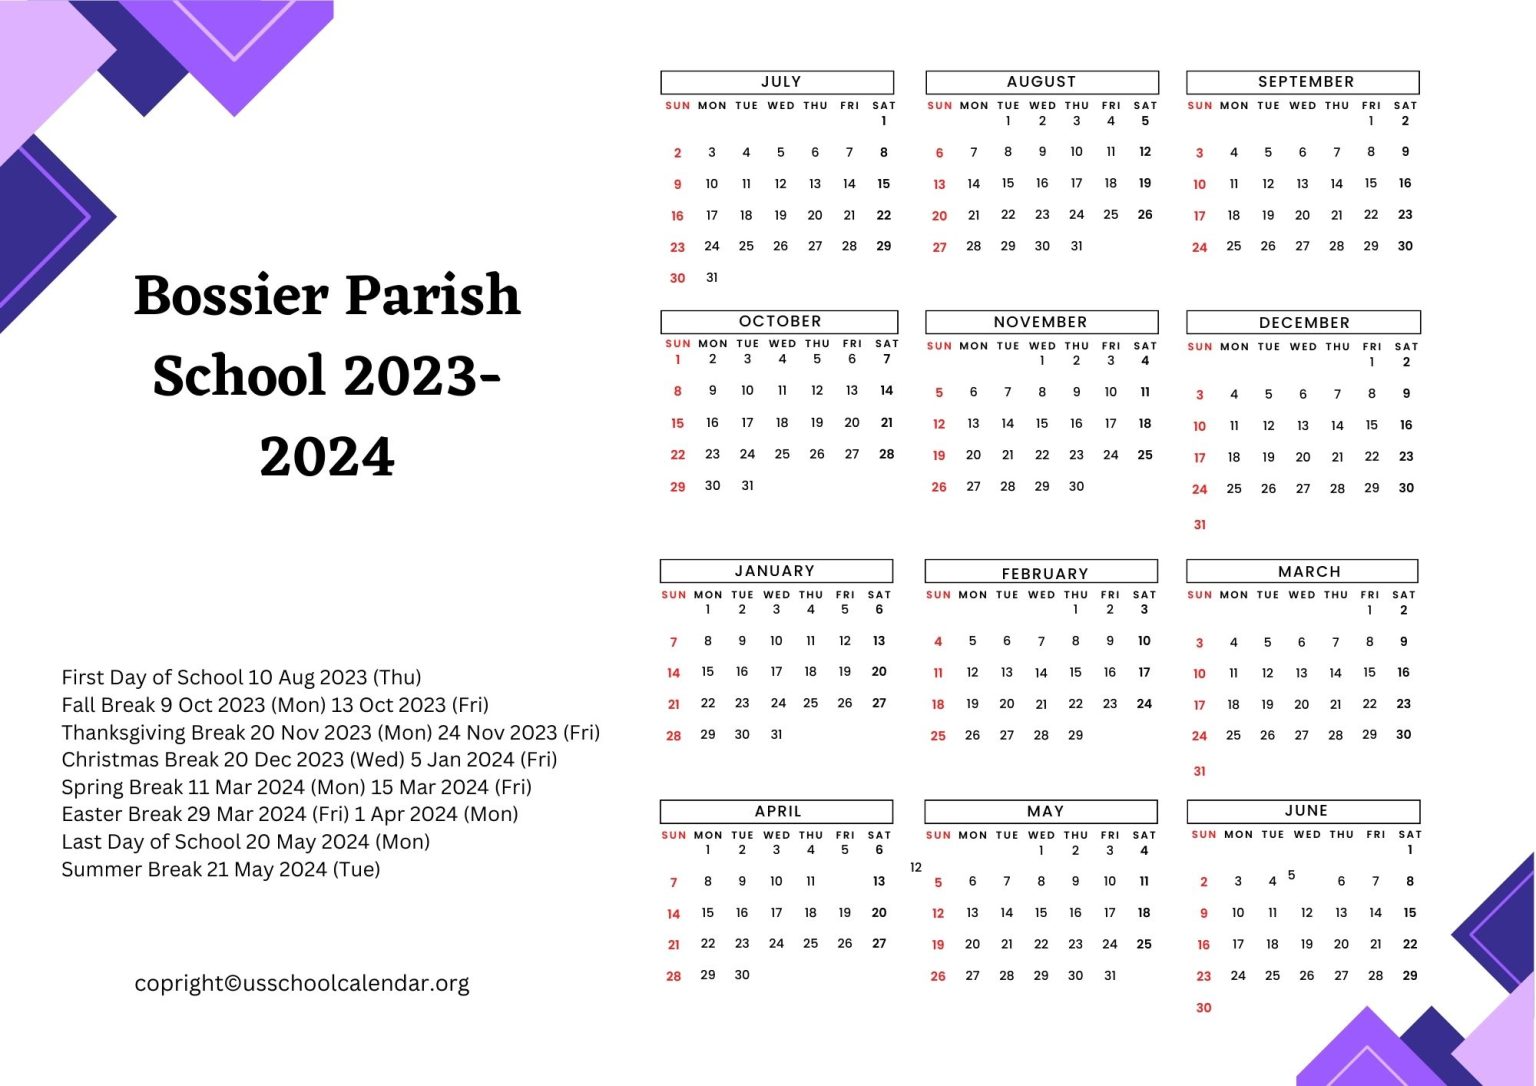 bossier-parish-school-calendar-with-holidays-2023-2024